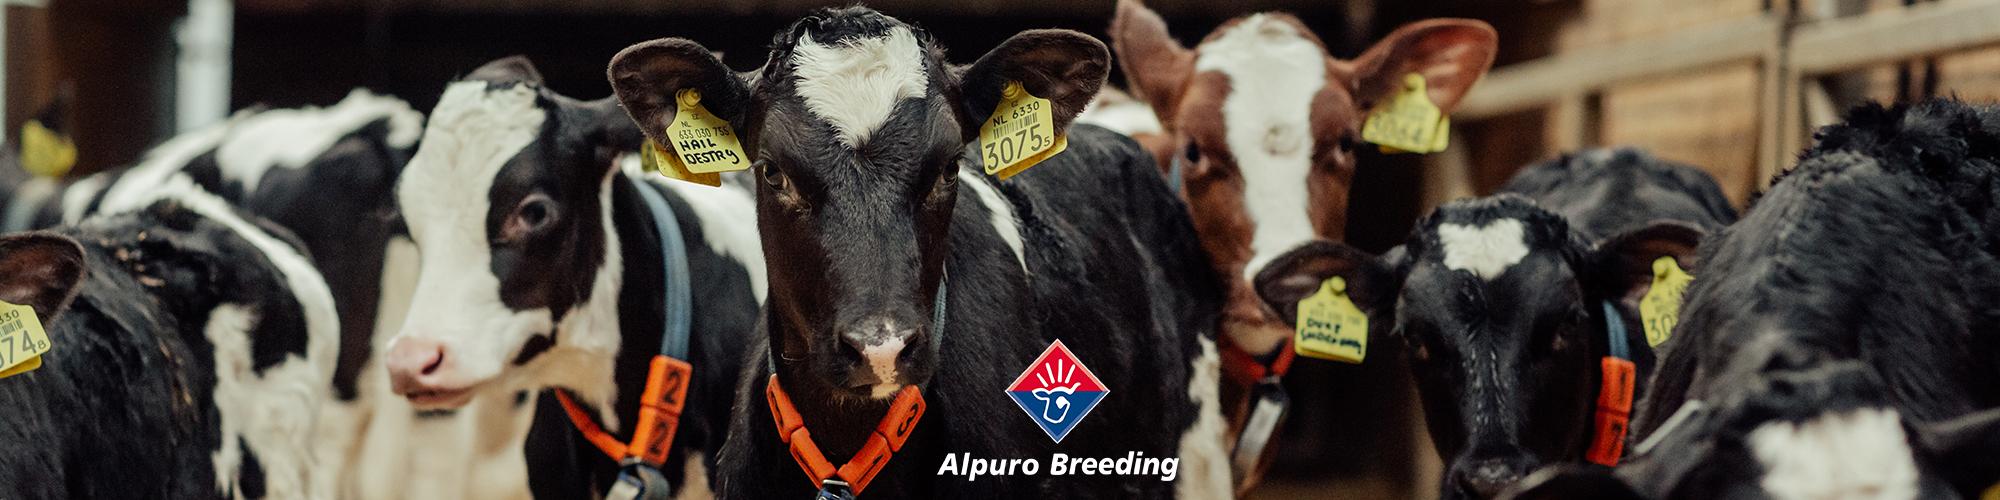 Alpuro Breeding